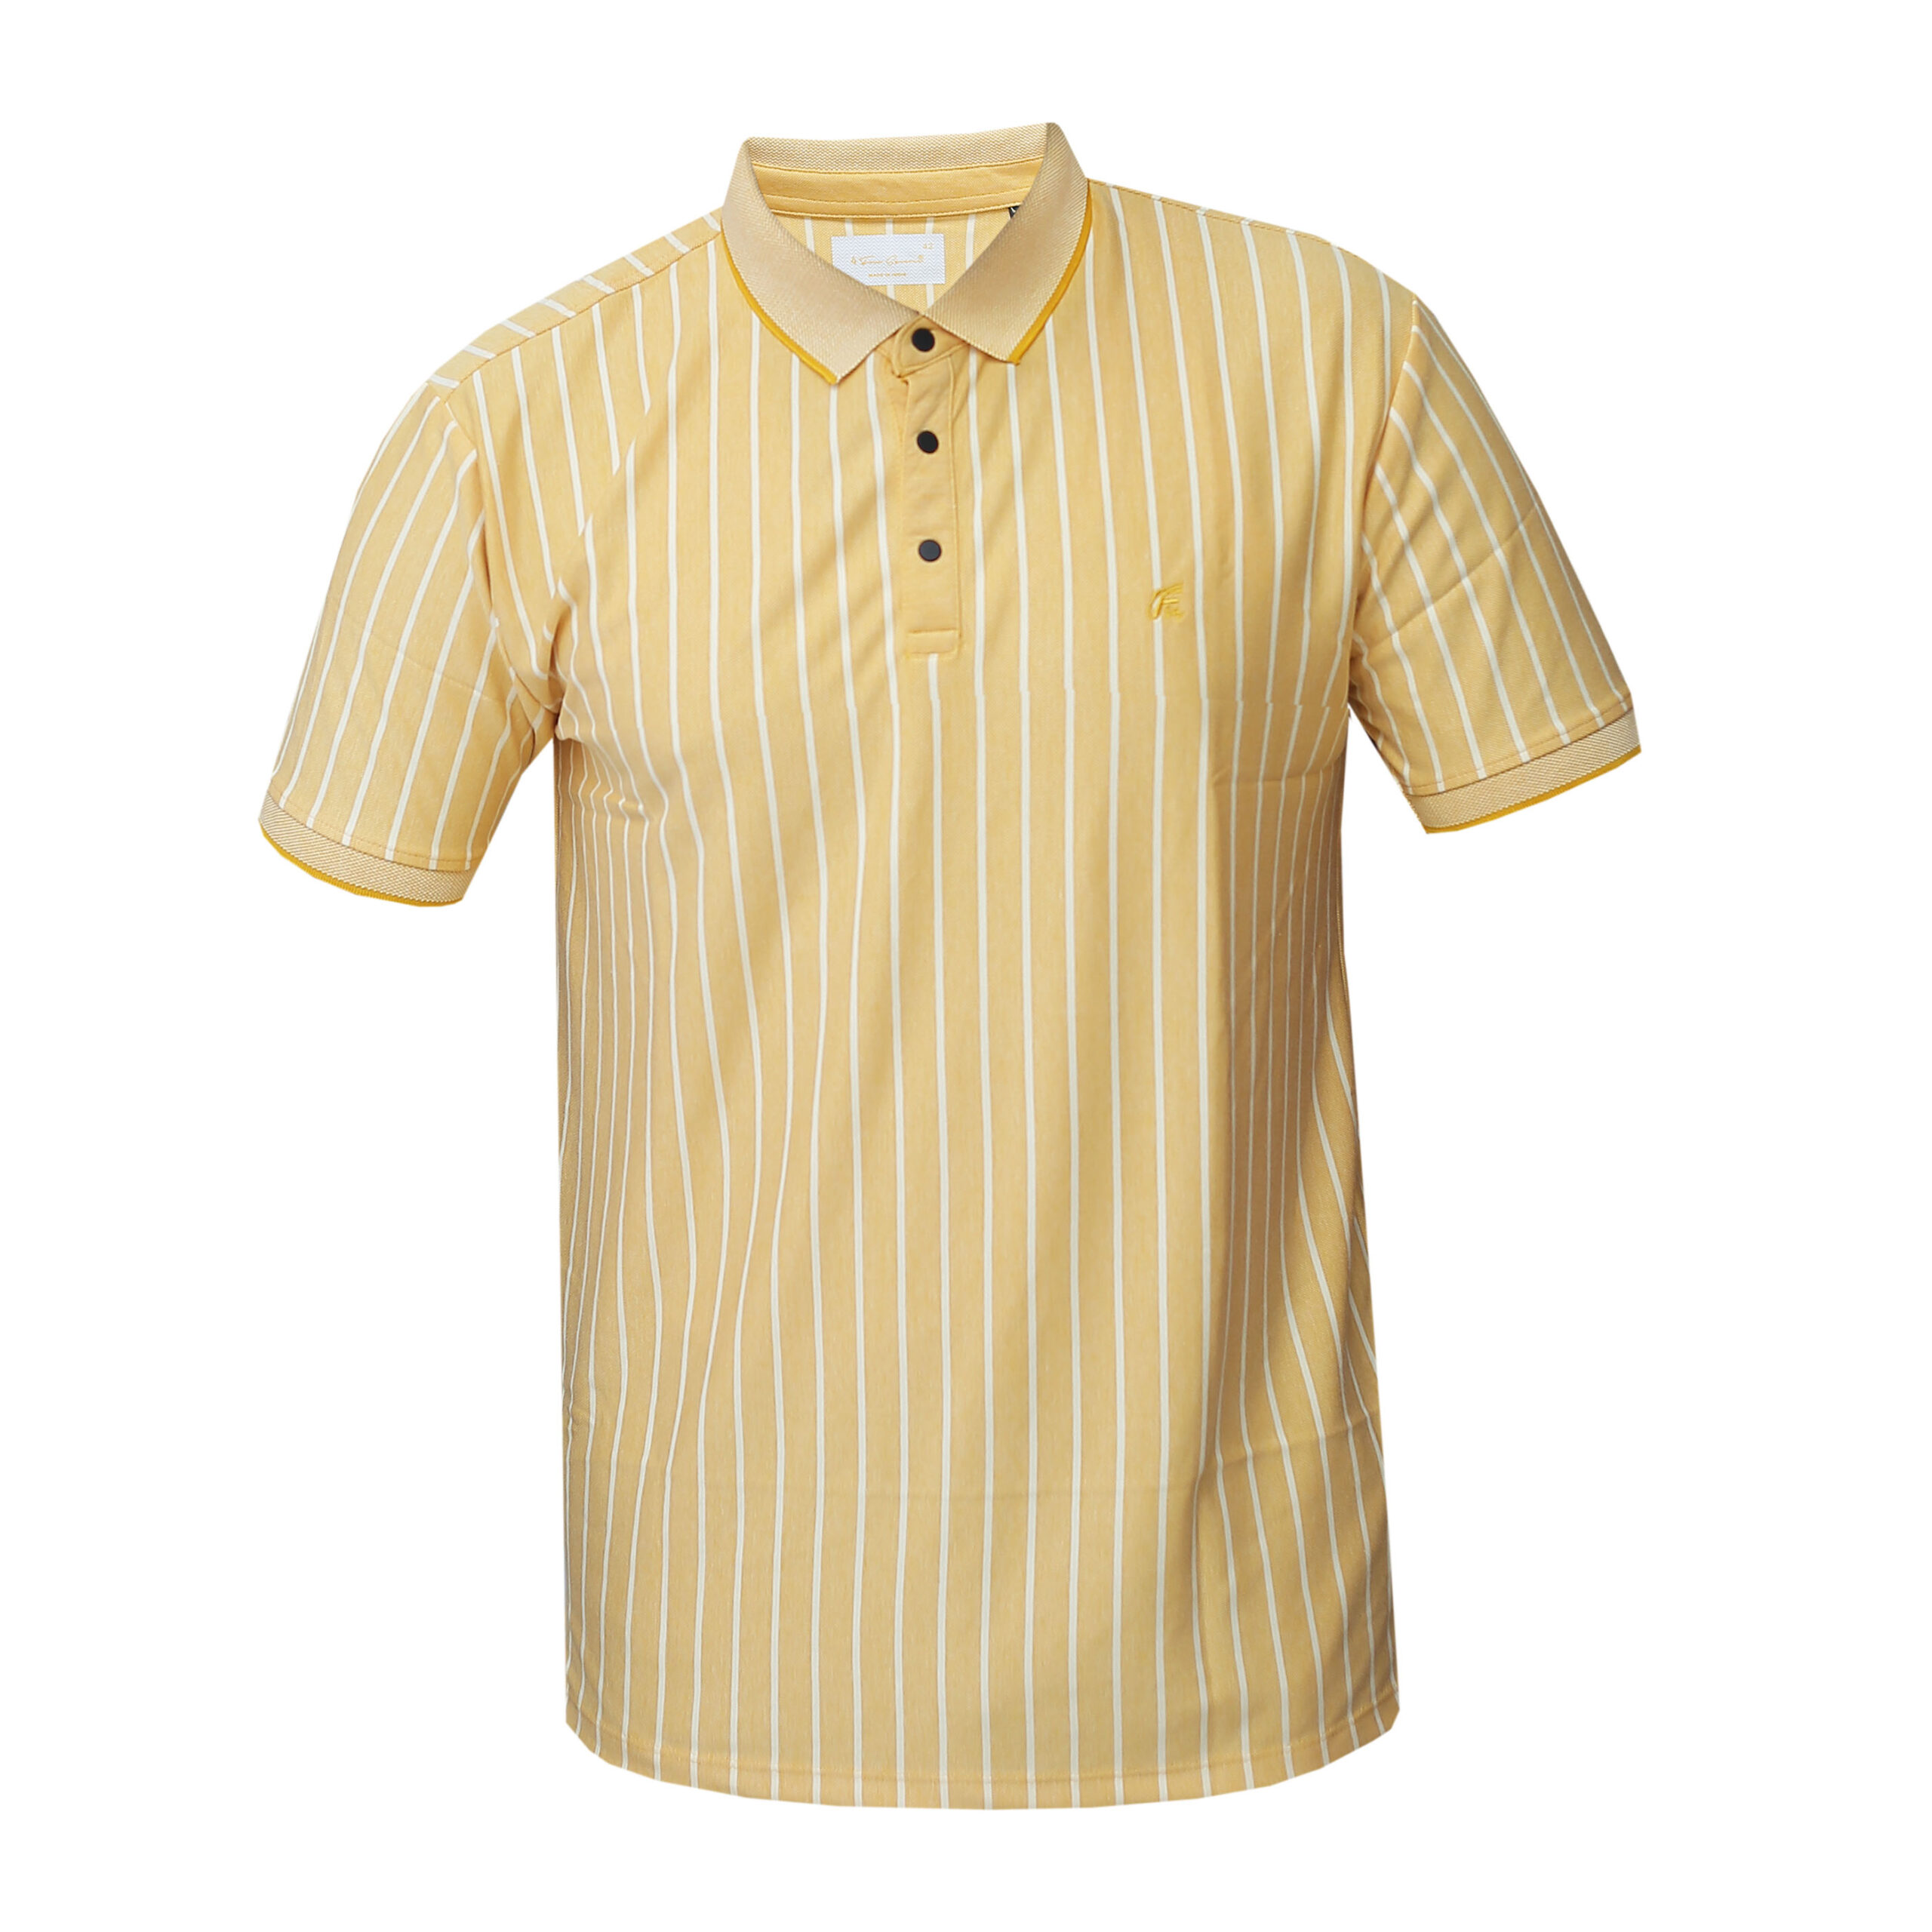 Striped T-Shirt for Men - Smart Casual Wear